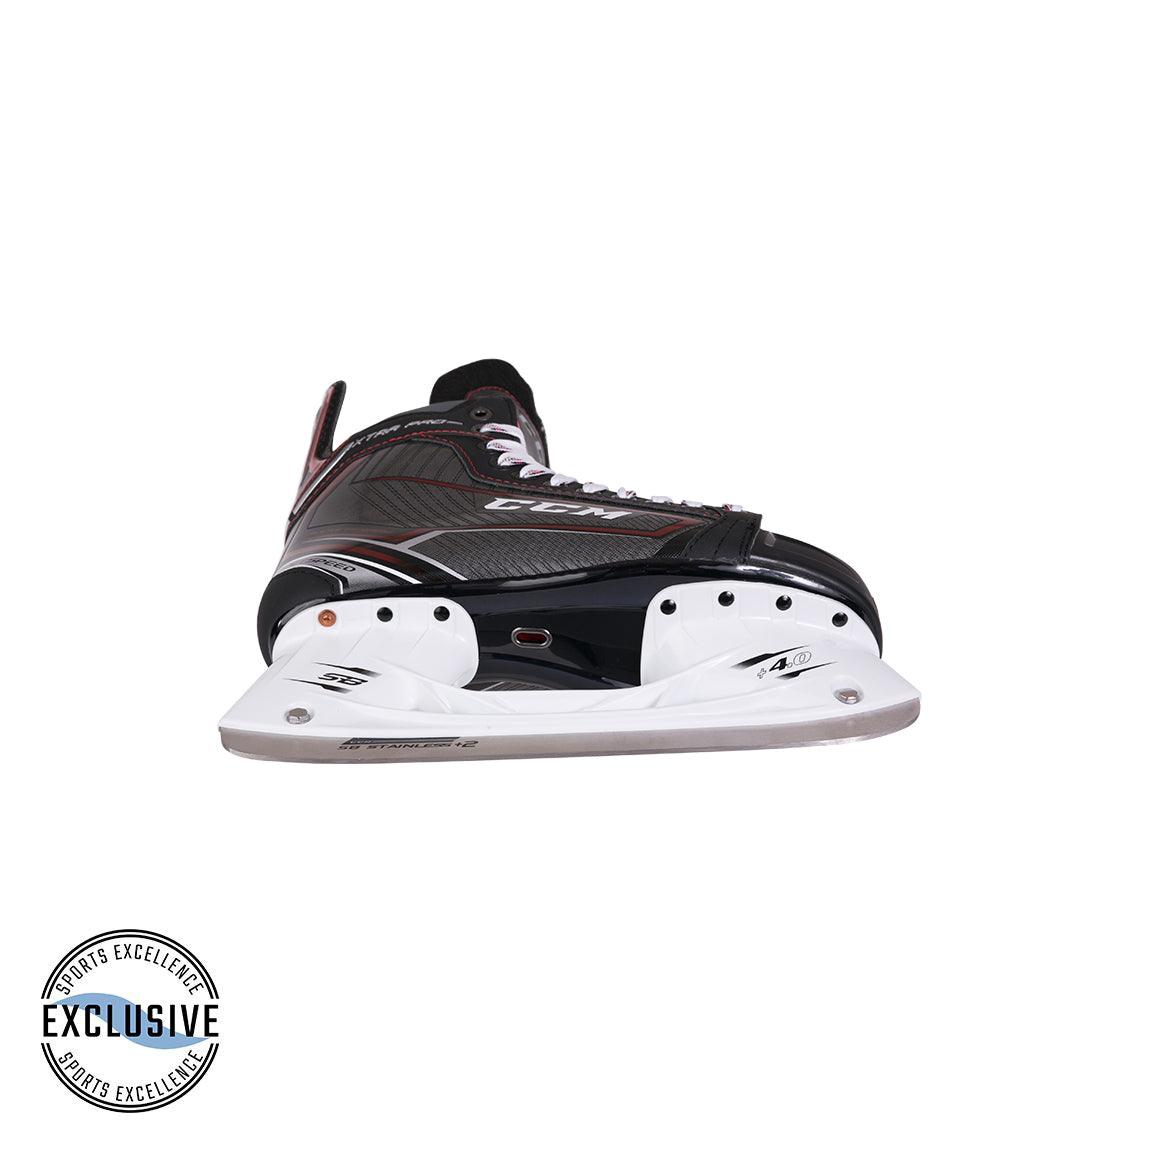 Jetspeed XTRA Pro Player Skates - Senior - Sports Excellence